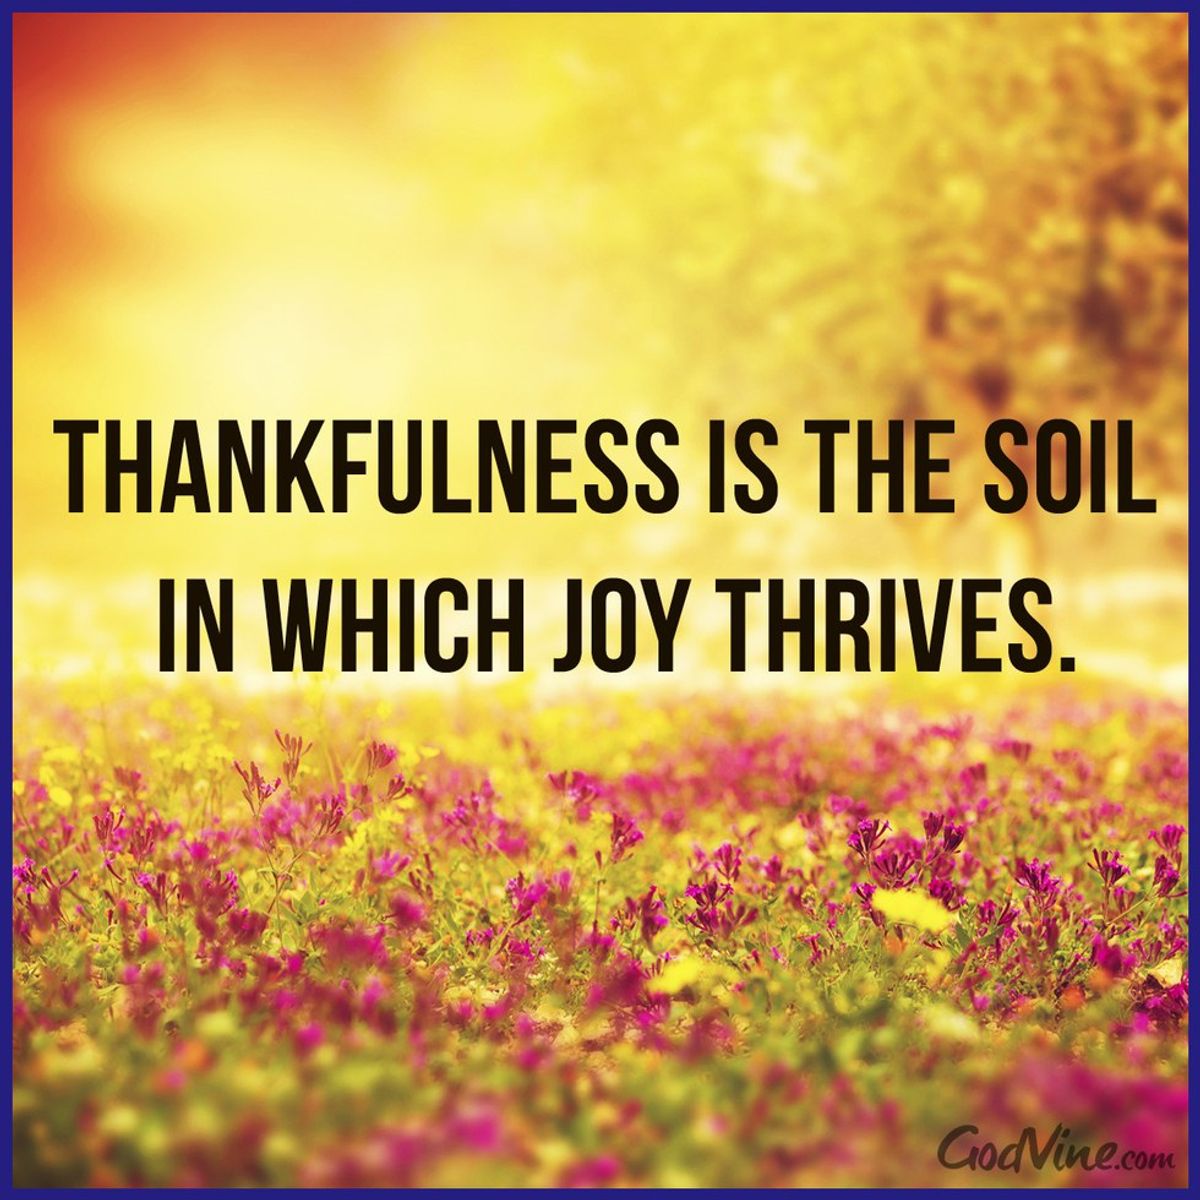 The Art of Thankfulness